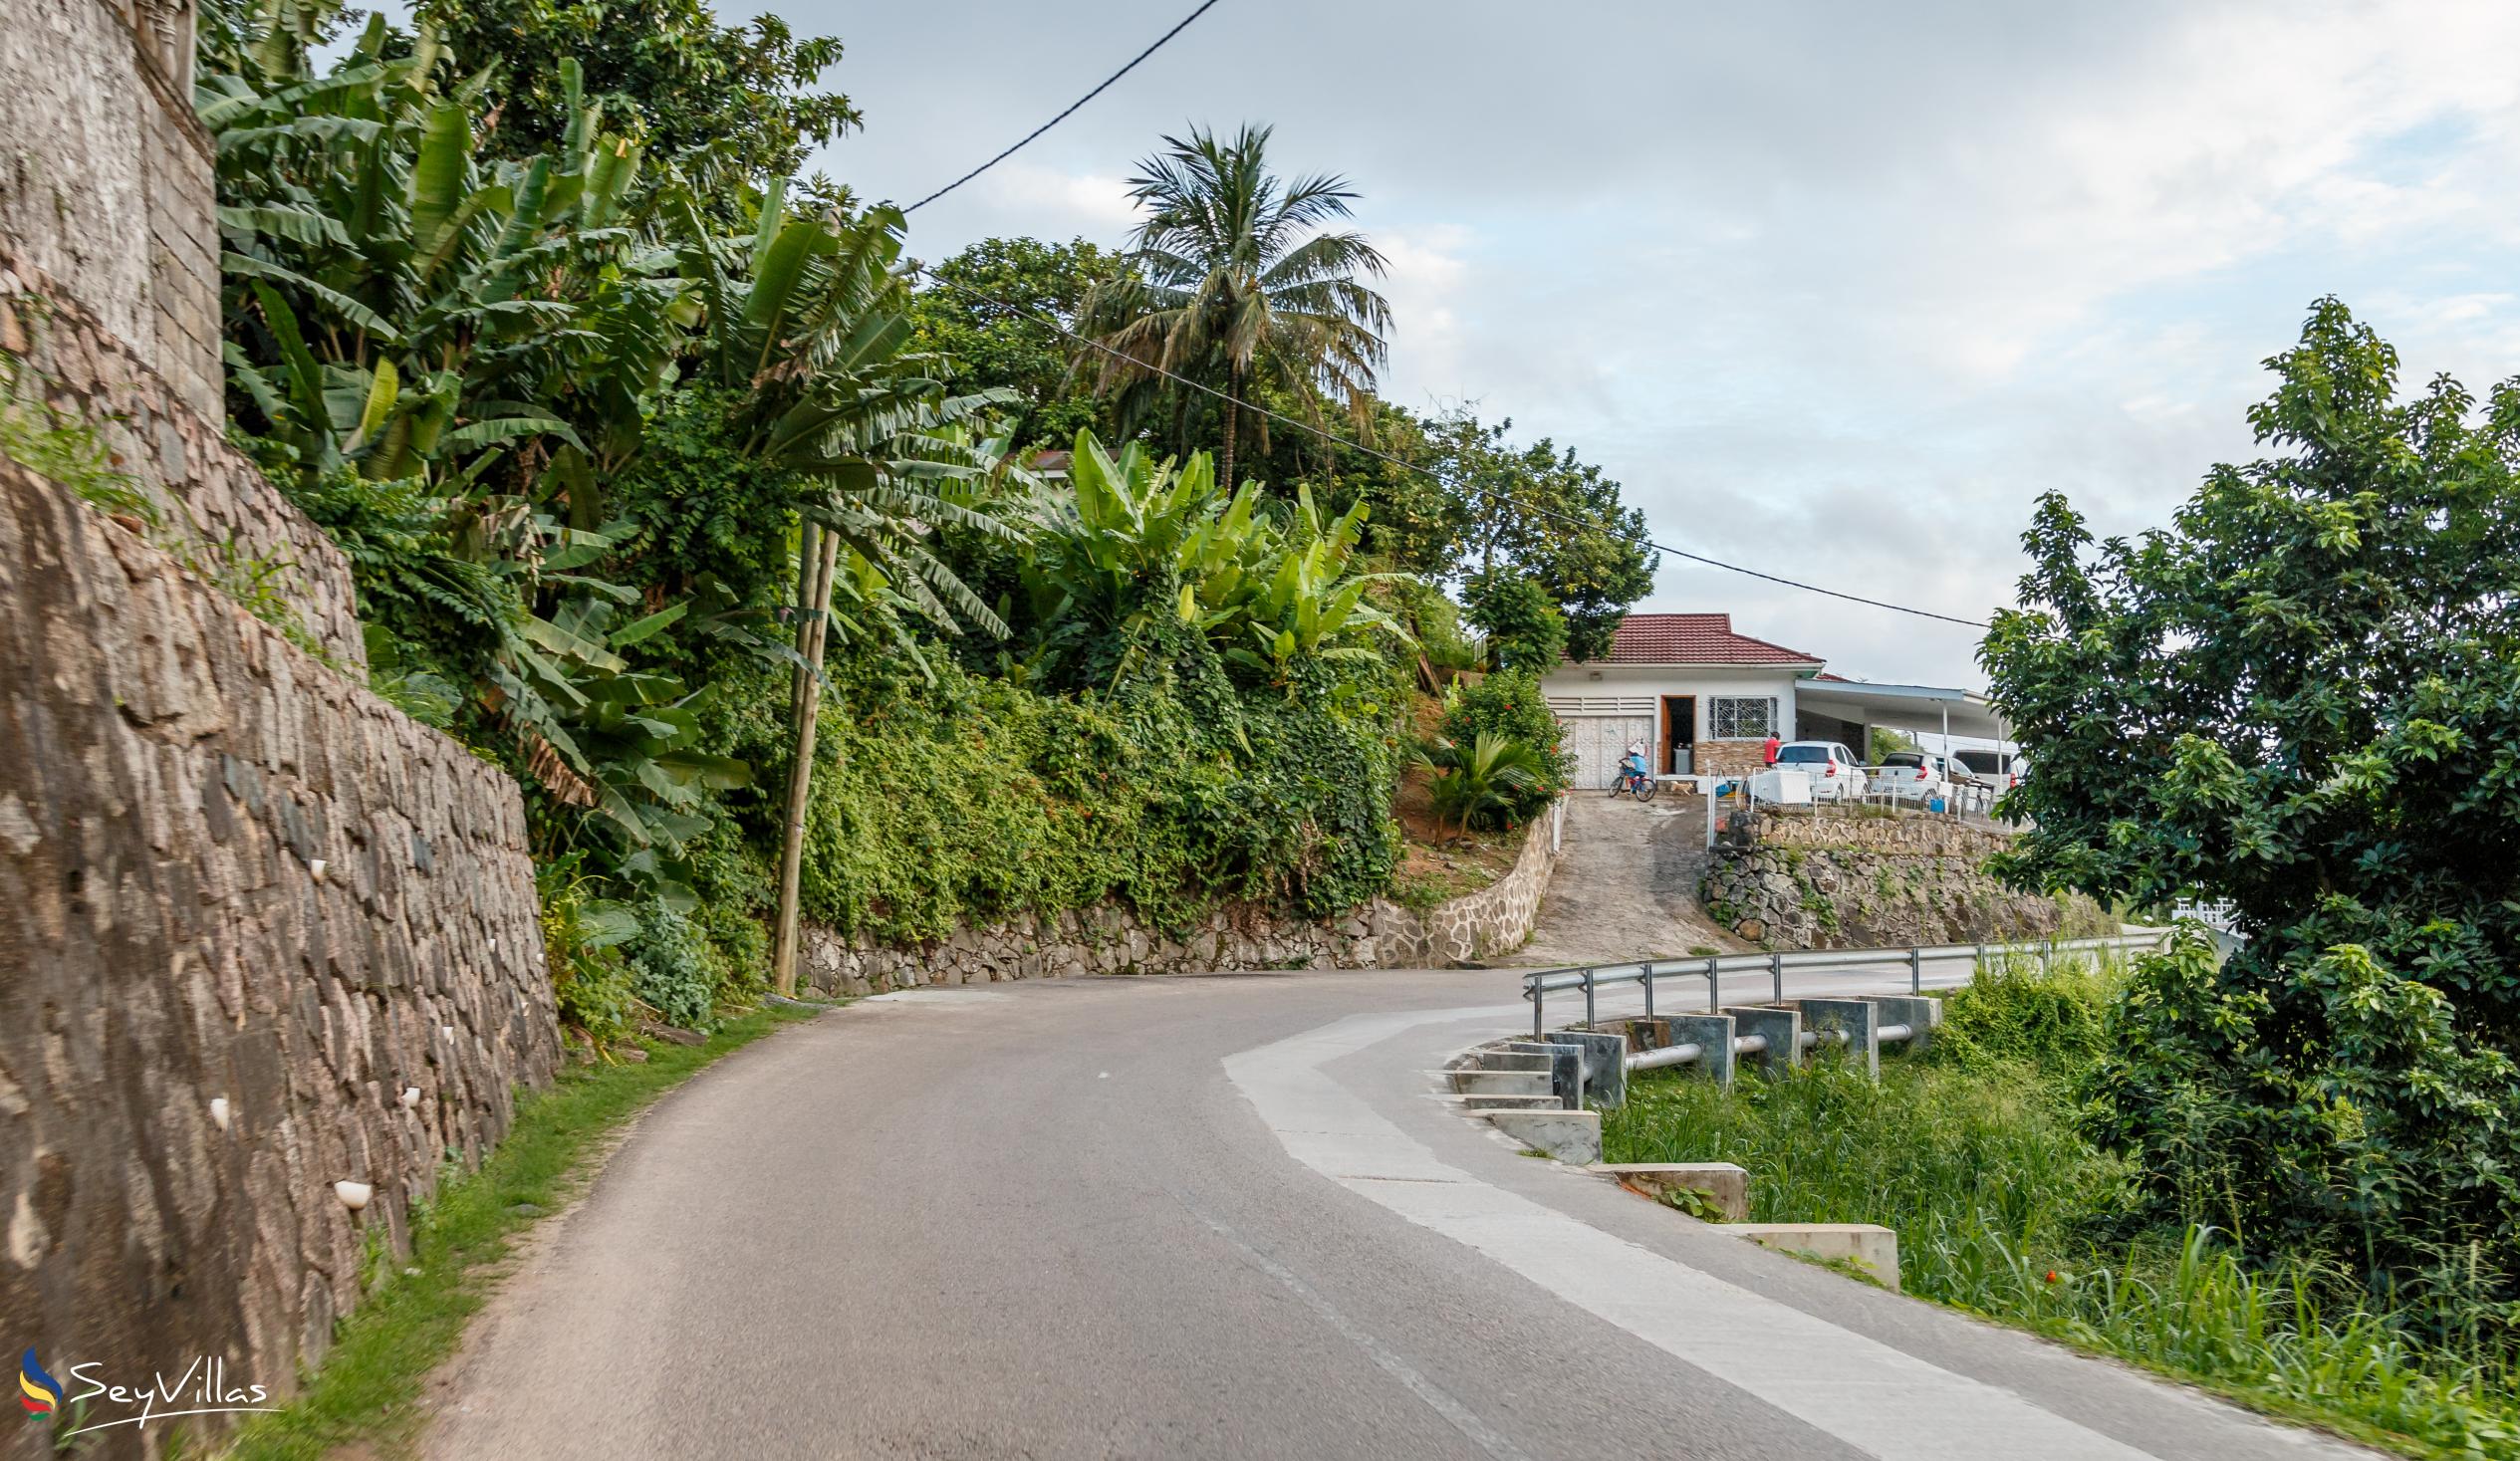 Foto 33: Takamaka Green Village - Location - Mahé (Seychelles)